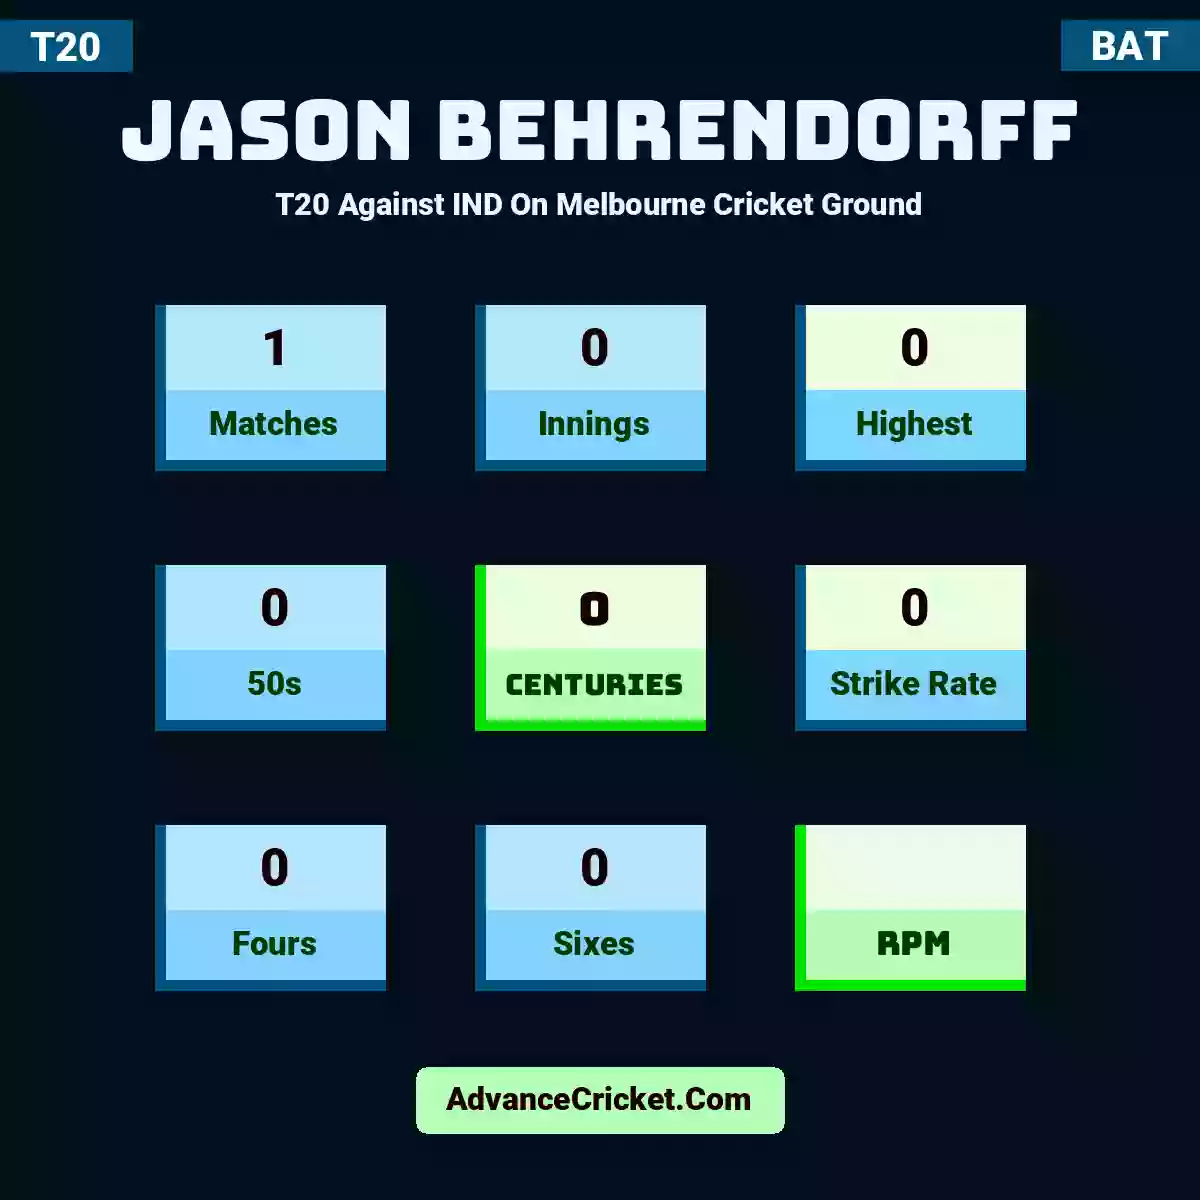 Jason Behrendorff T20  Against IND On Melbourne Cricket Ground, Jason Behrendorff played 1 matches, scored 0 runs as highest, 0 half-centuries, and 0 centuries, with a strike rate of 0. J.Behrendorff hit 0 fours and 0 sixes.